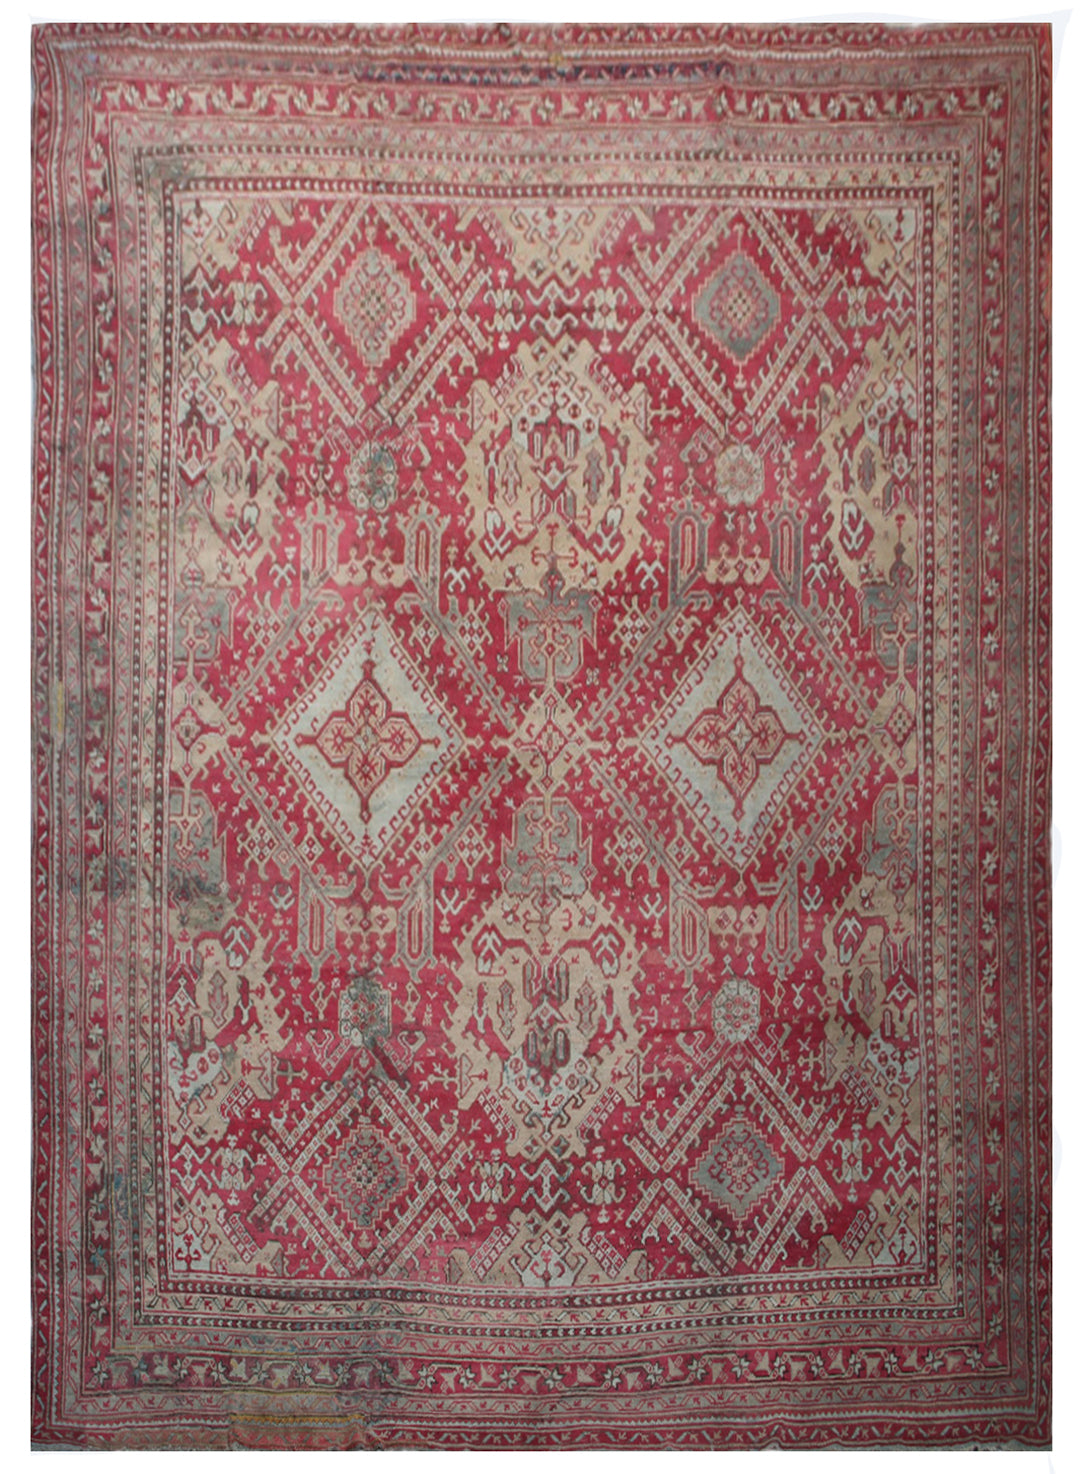 13'x16' Antique Semi-antique Turkish Oushak Rug